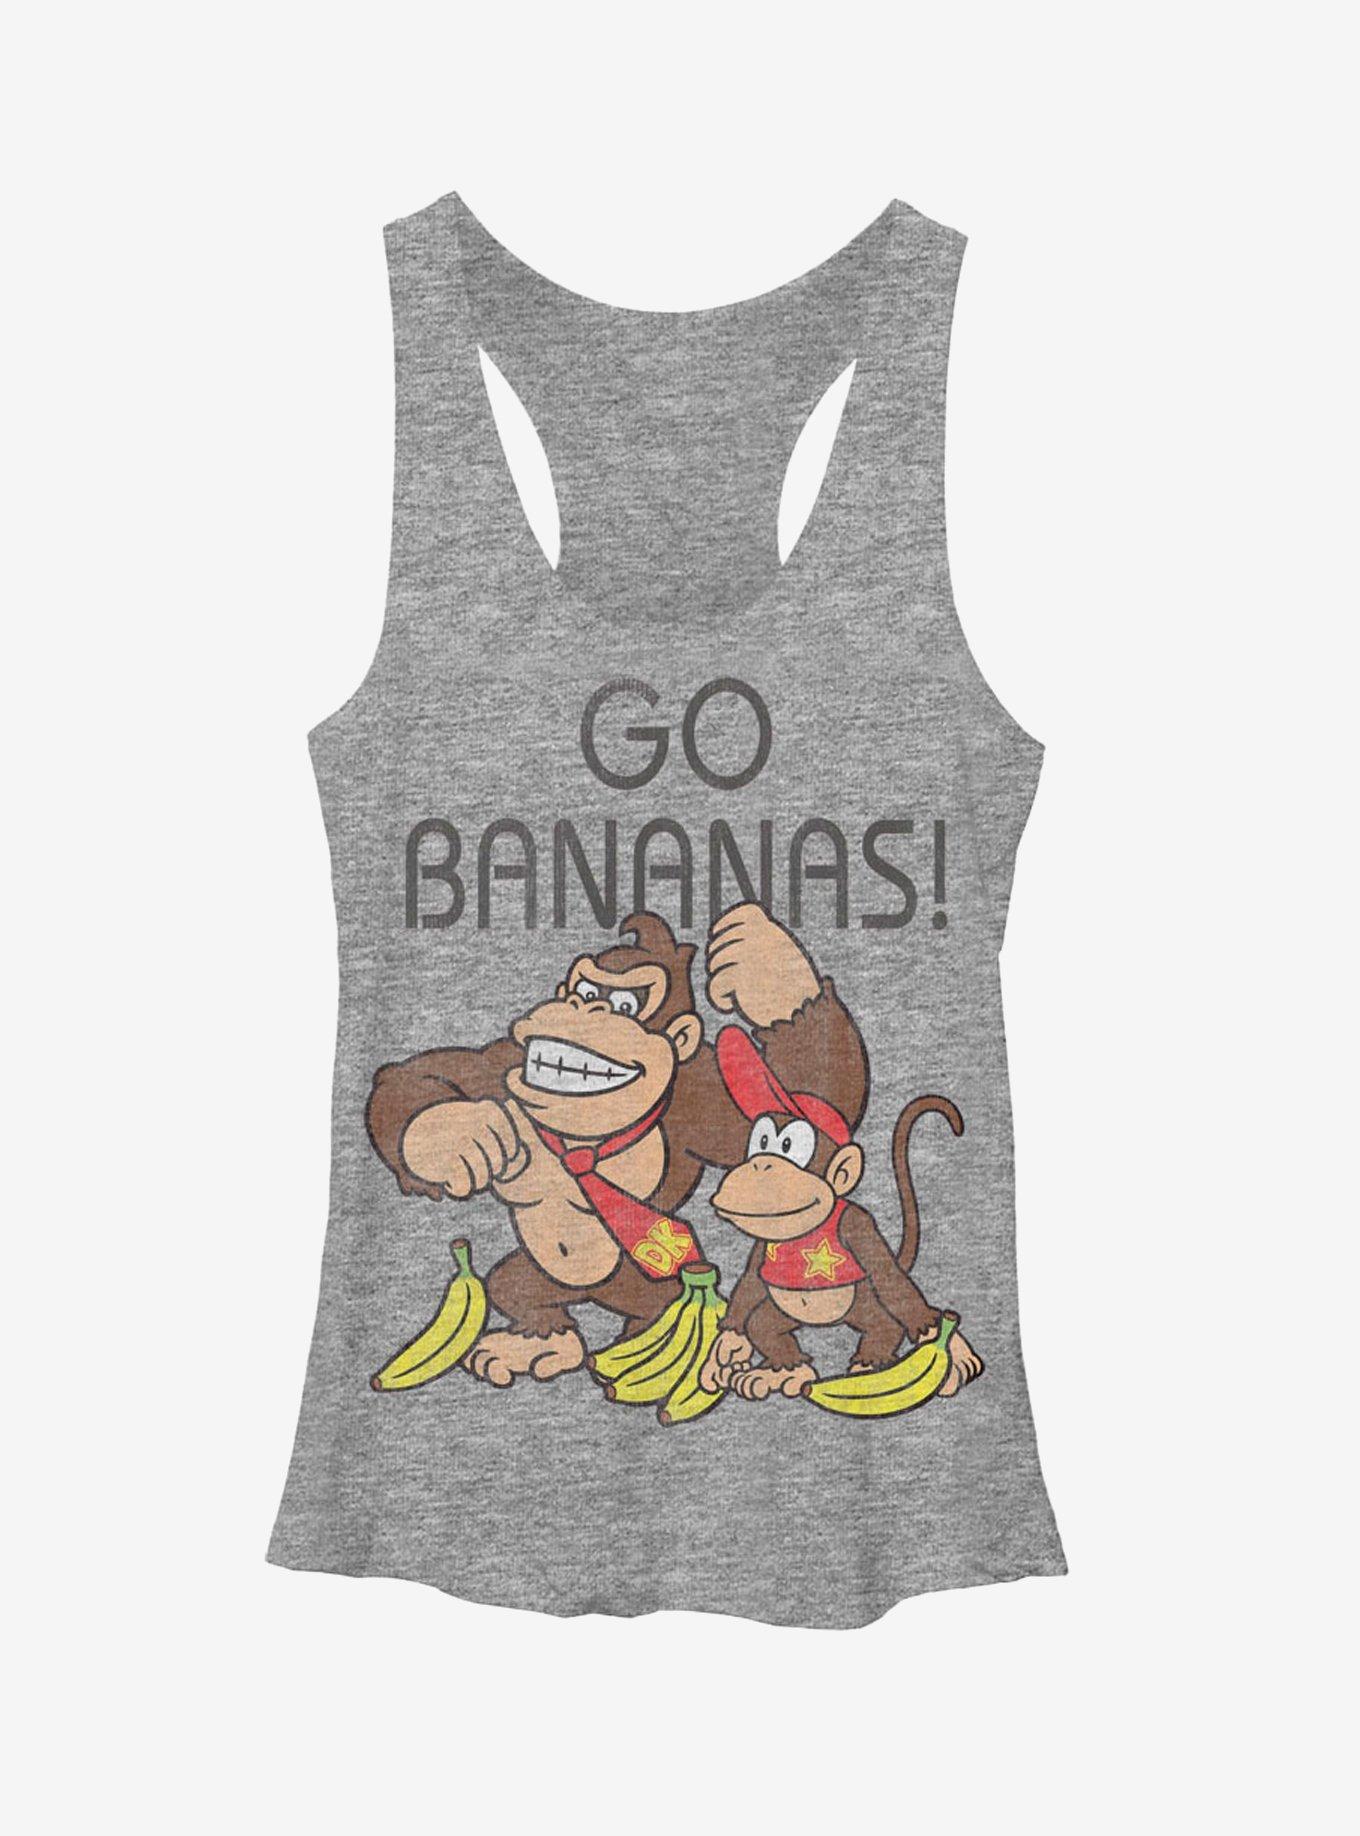 Nintendo Donkey Kong Go Bananas Girls Tanks